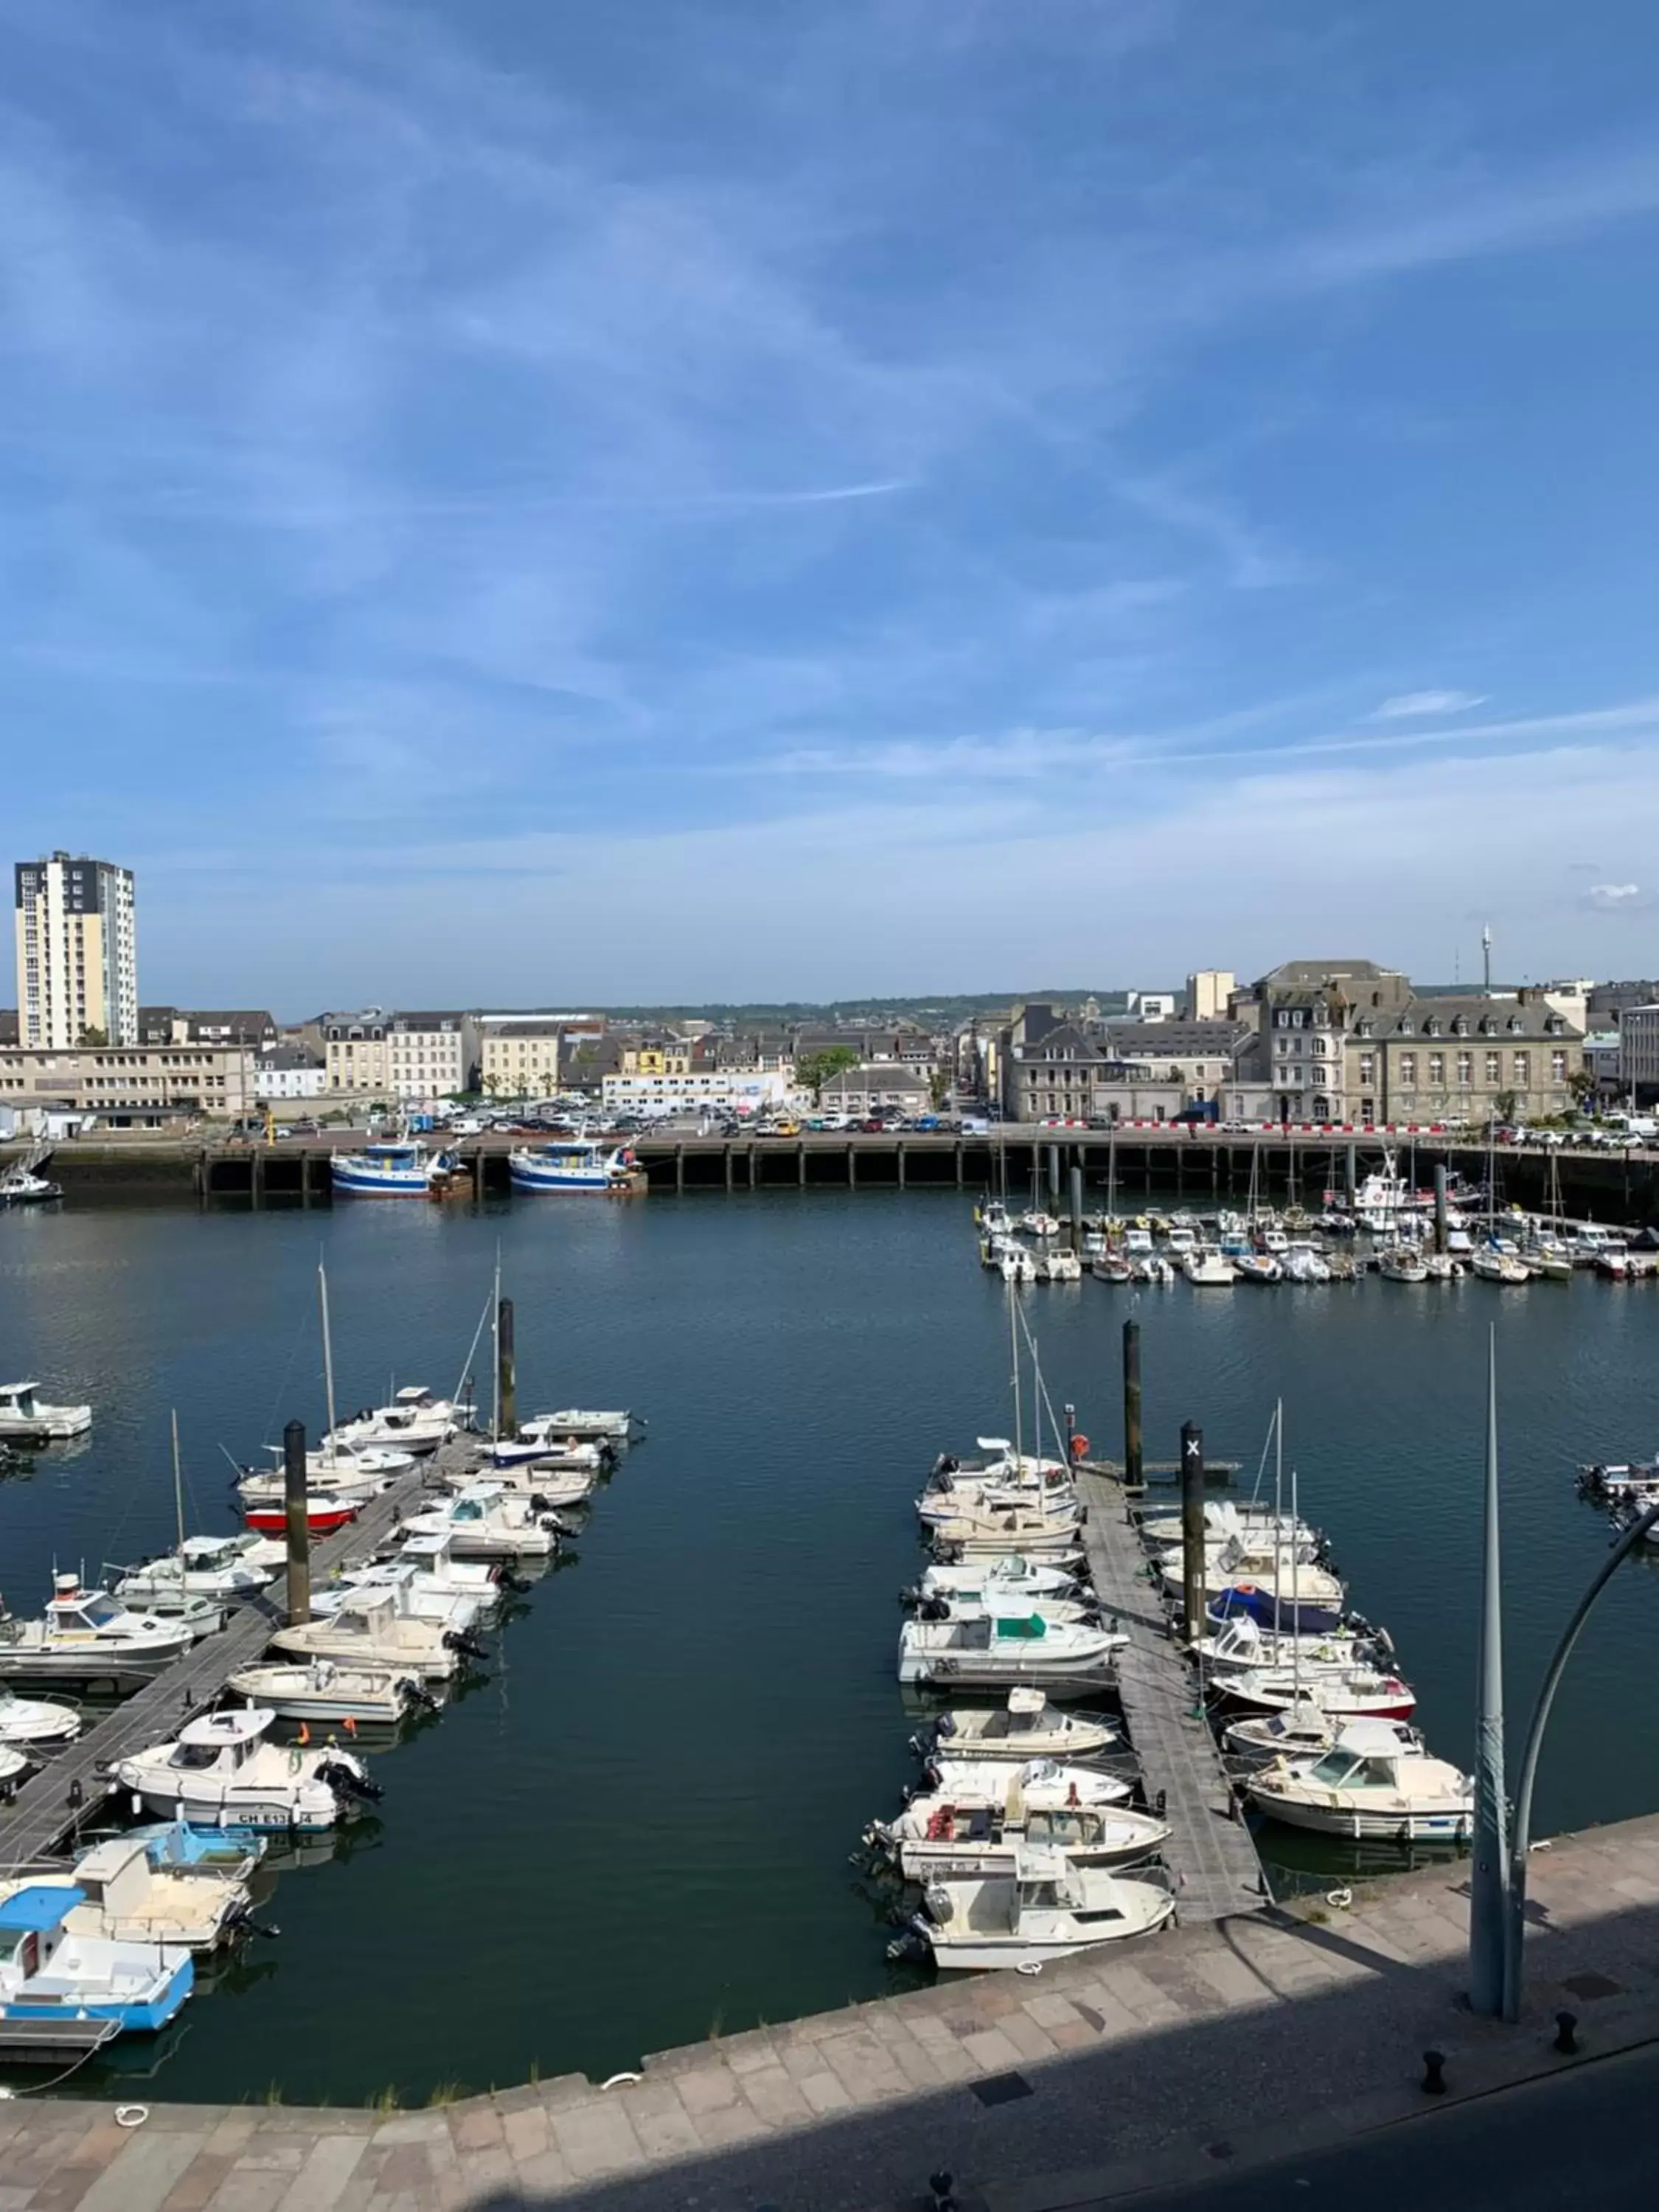 Sea view in Ambassadeur Hotel - Cherbourg Port de Plaisance